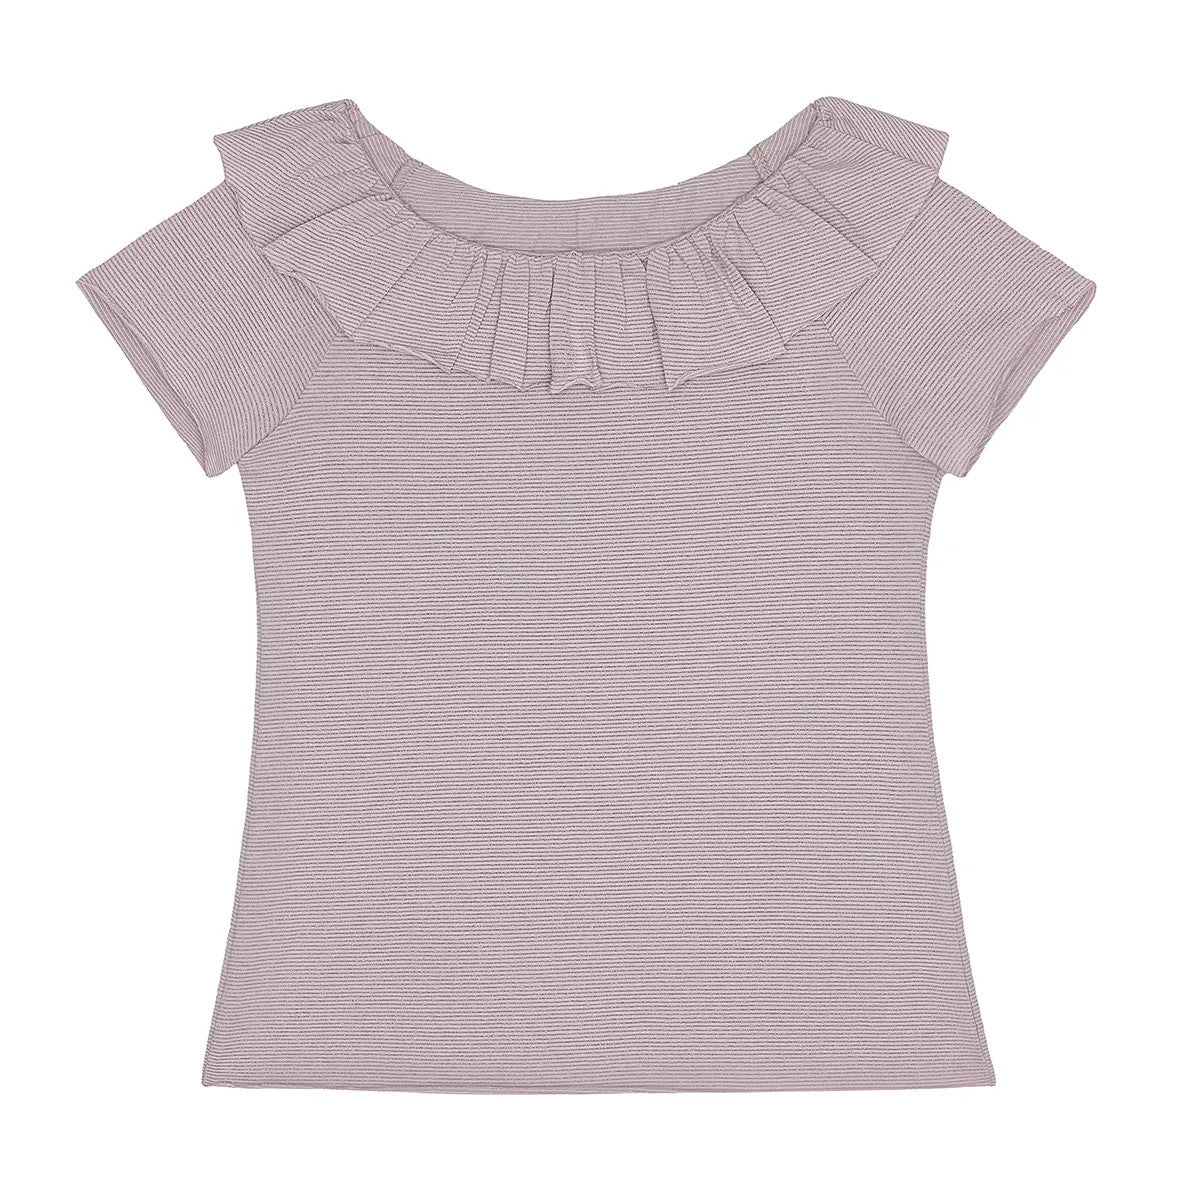 Little Hedonist light purple organic cotton short sleeve shirt with a ruffled neck.